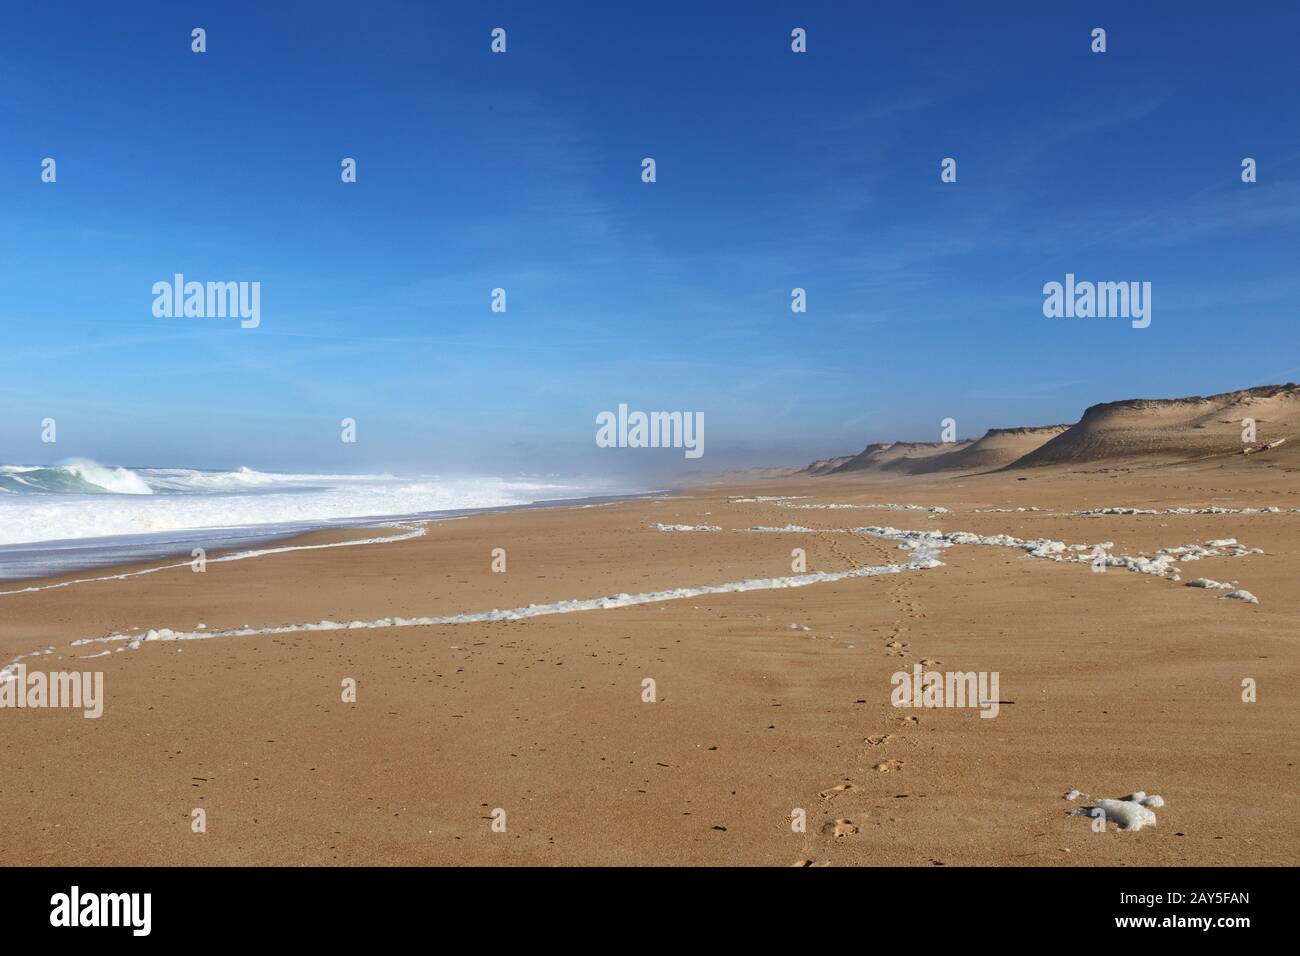 desert beach on the atlantic ocean in southern france Stock Photo